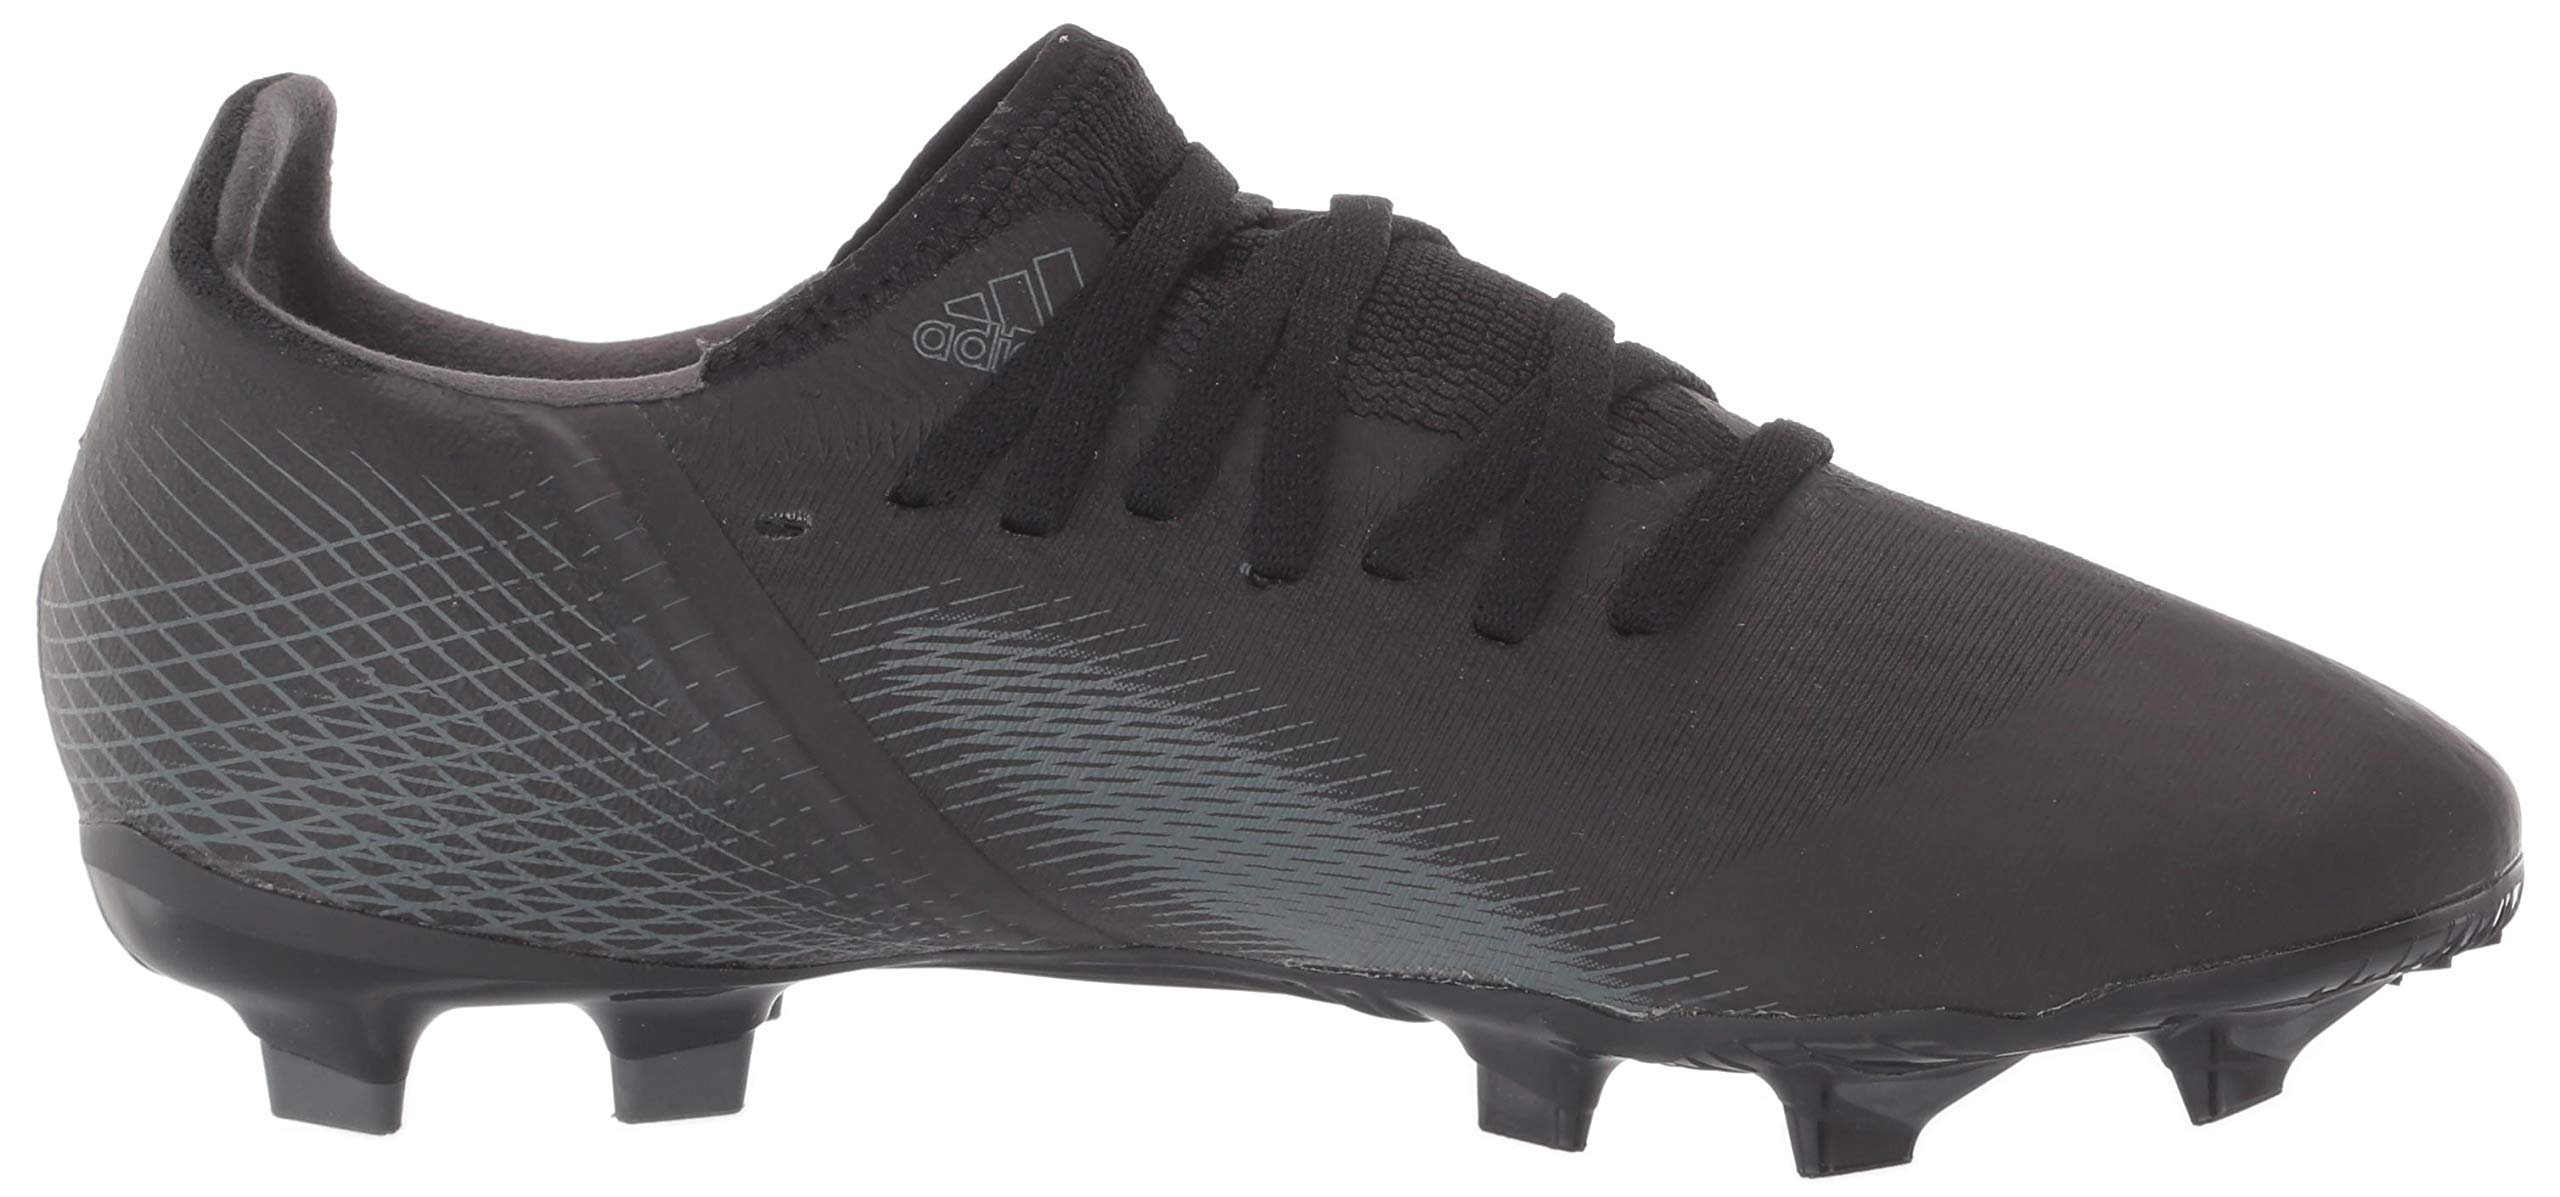 Mua adidas Men's X  Soccer Shoe trên Amazon Mỹ chính hãng 2023 |  Fado